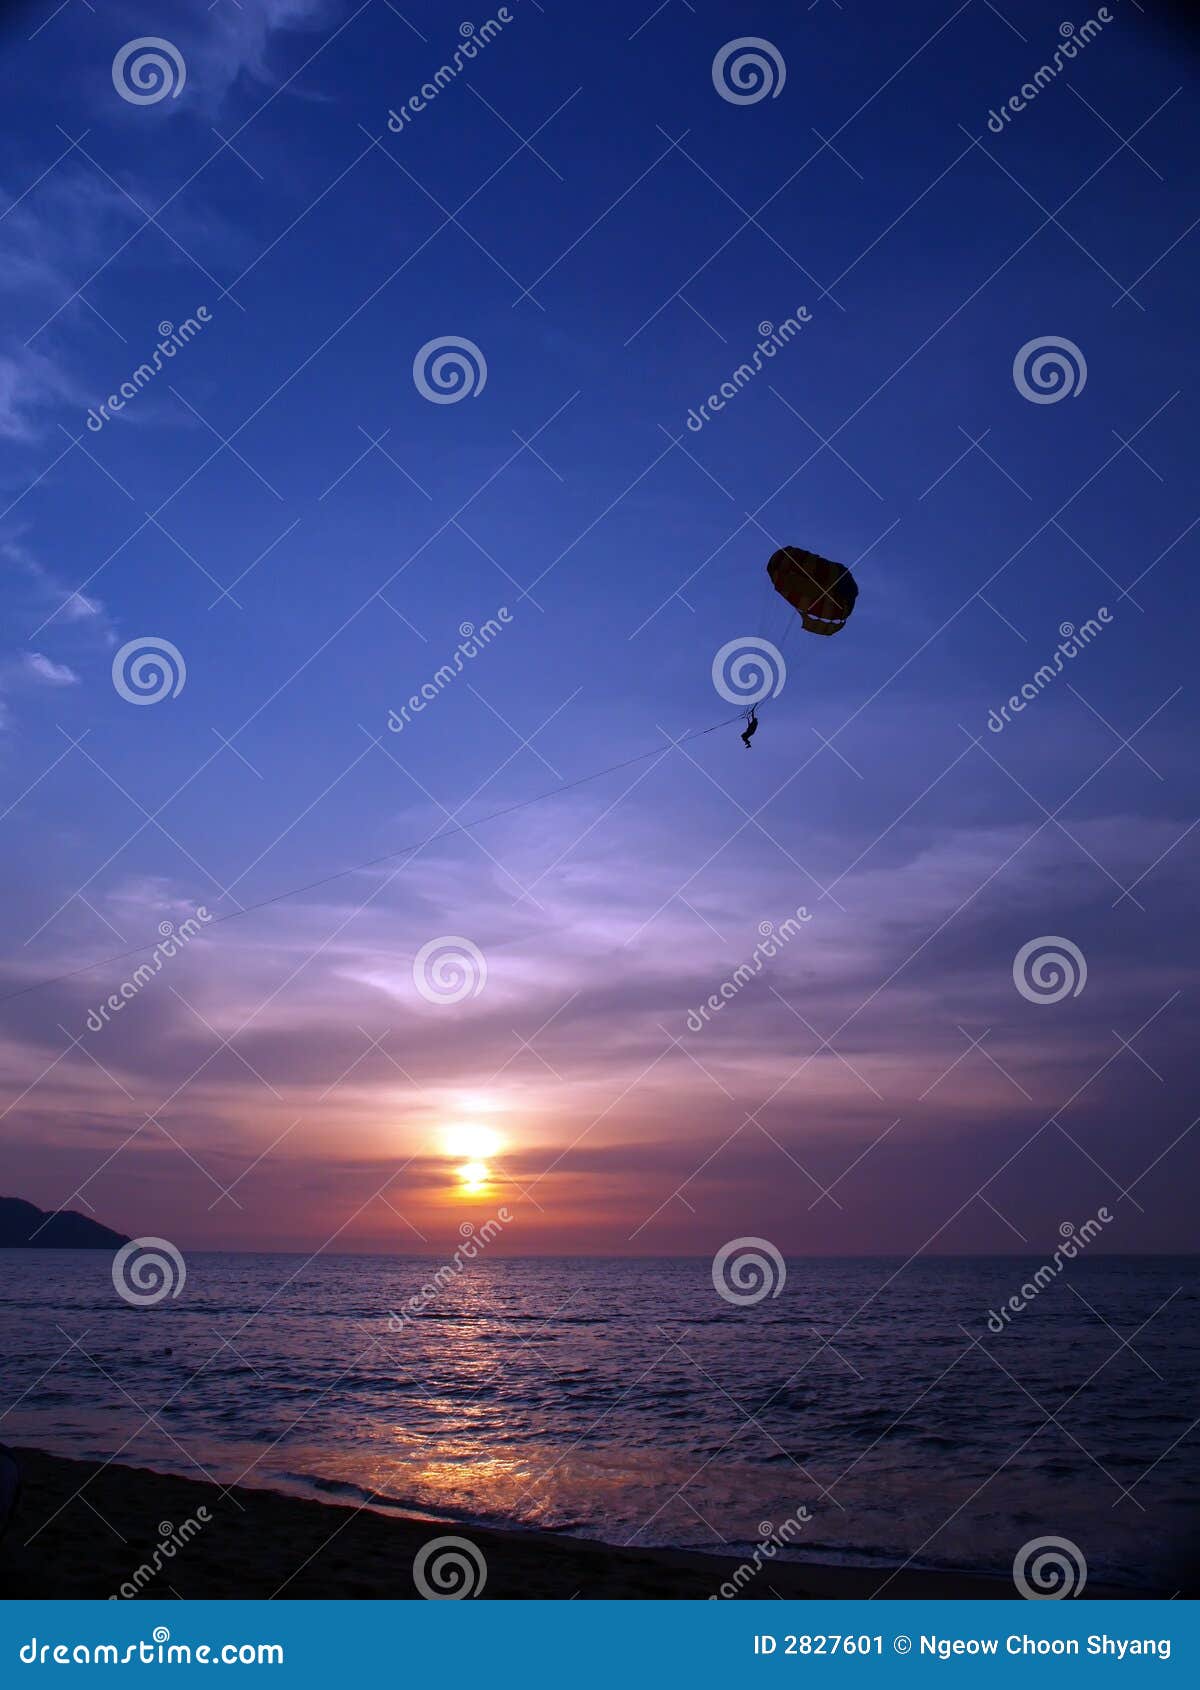 sunset gliding